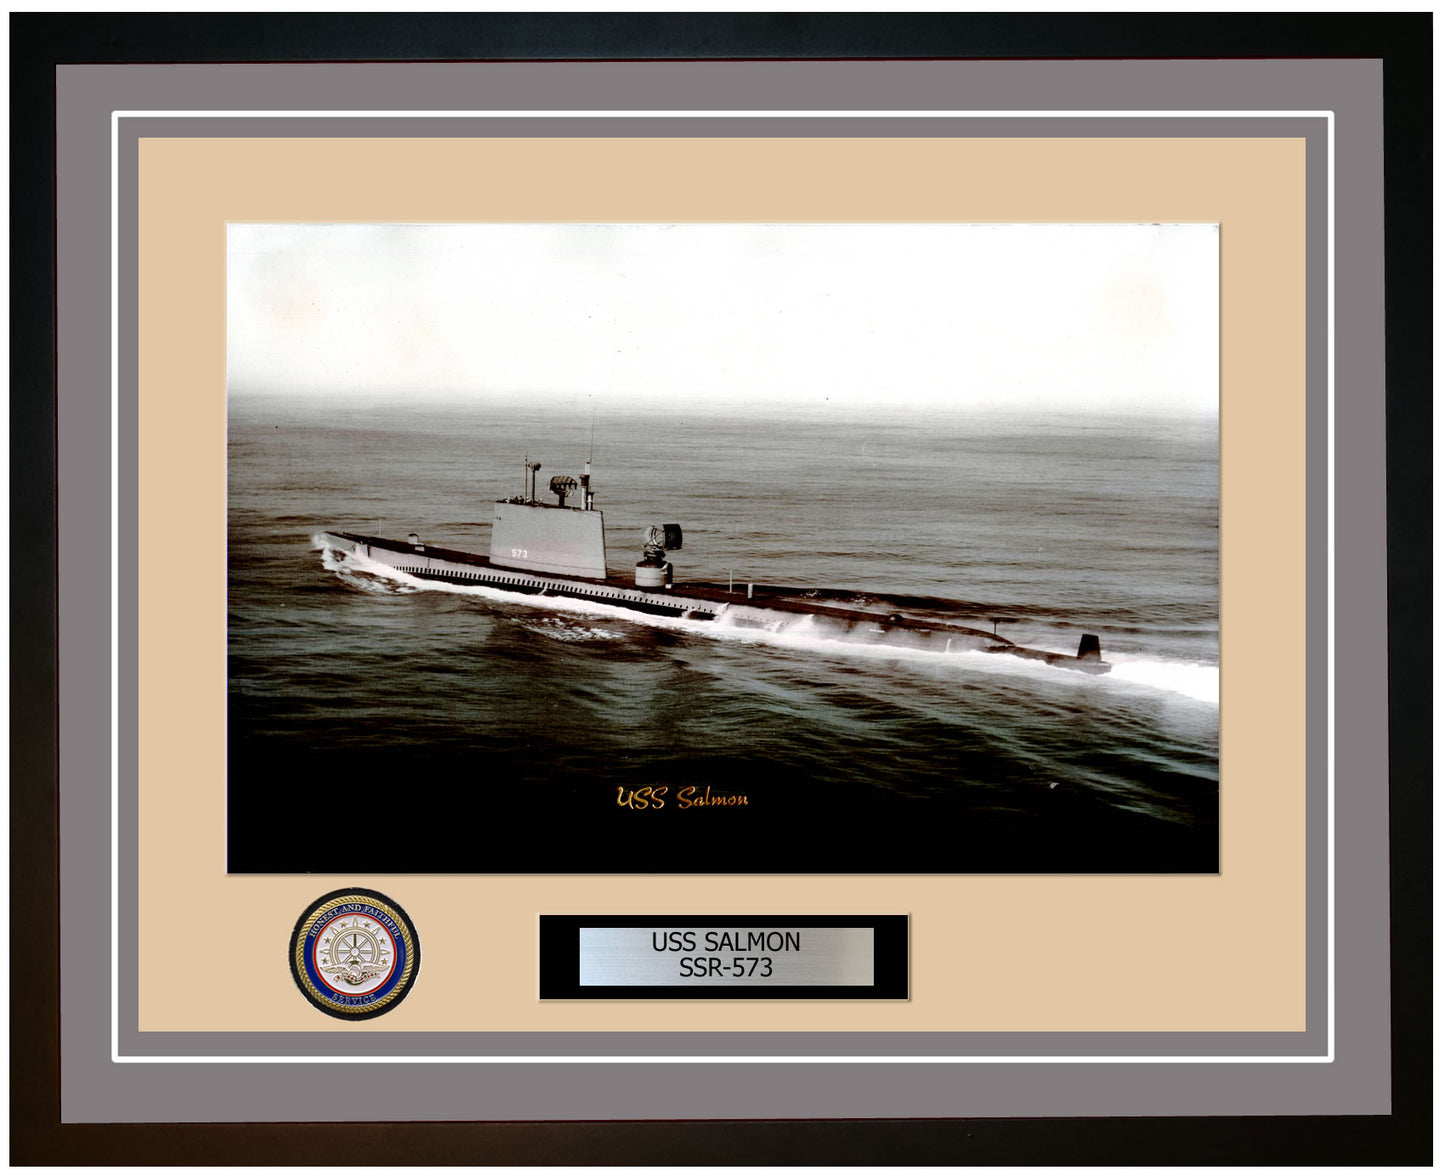 USS Salmon SSR-573 Framed Navy Ship Photo Grey